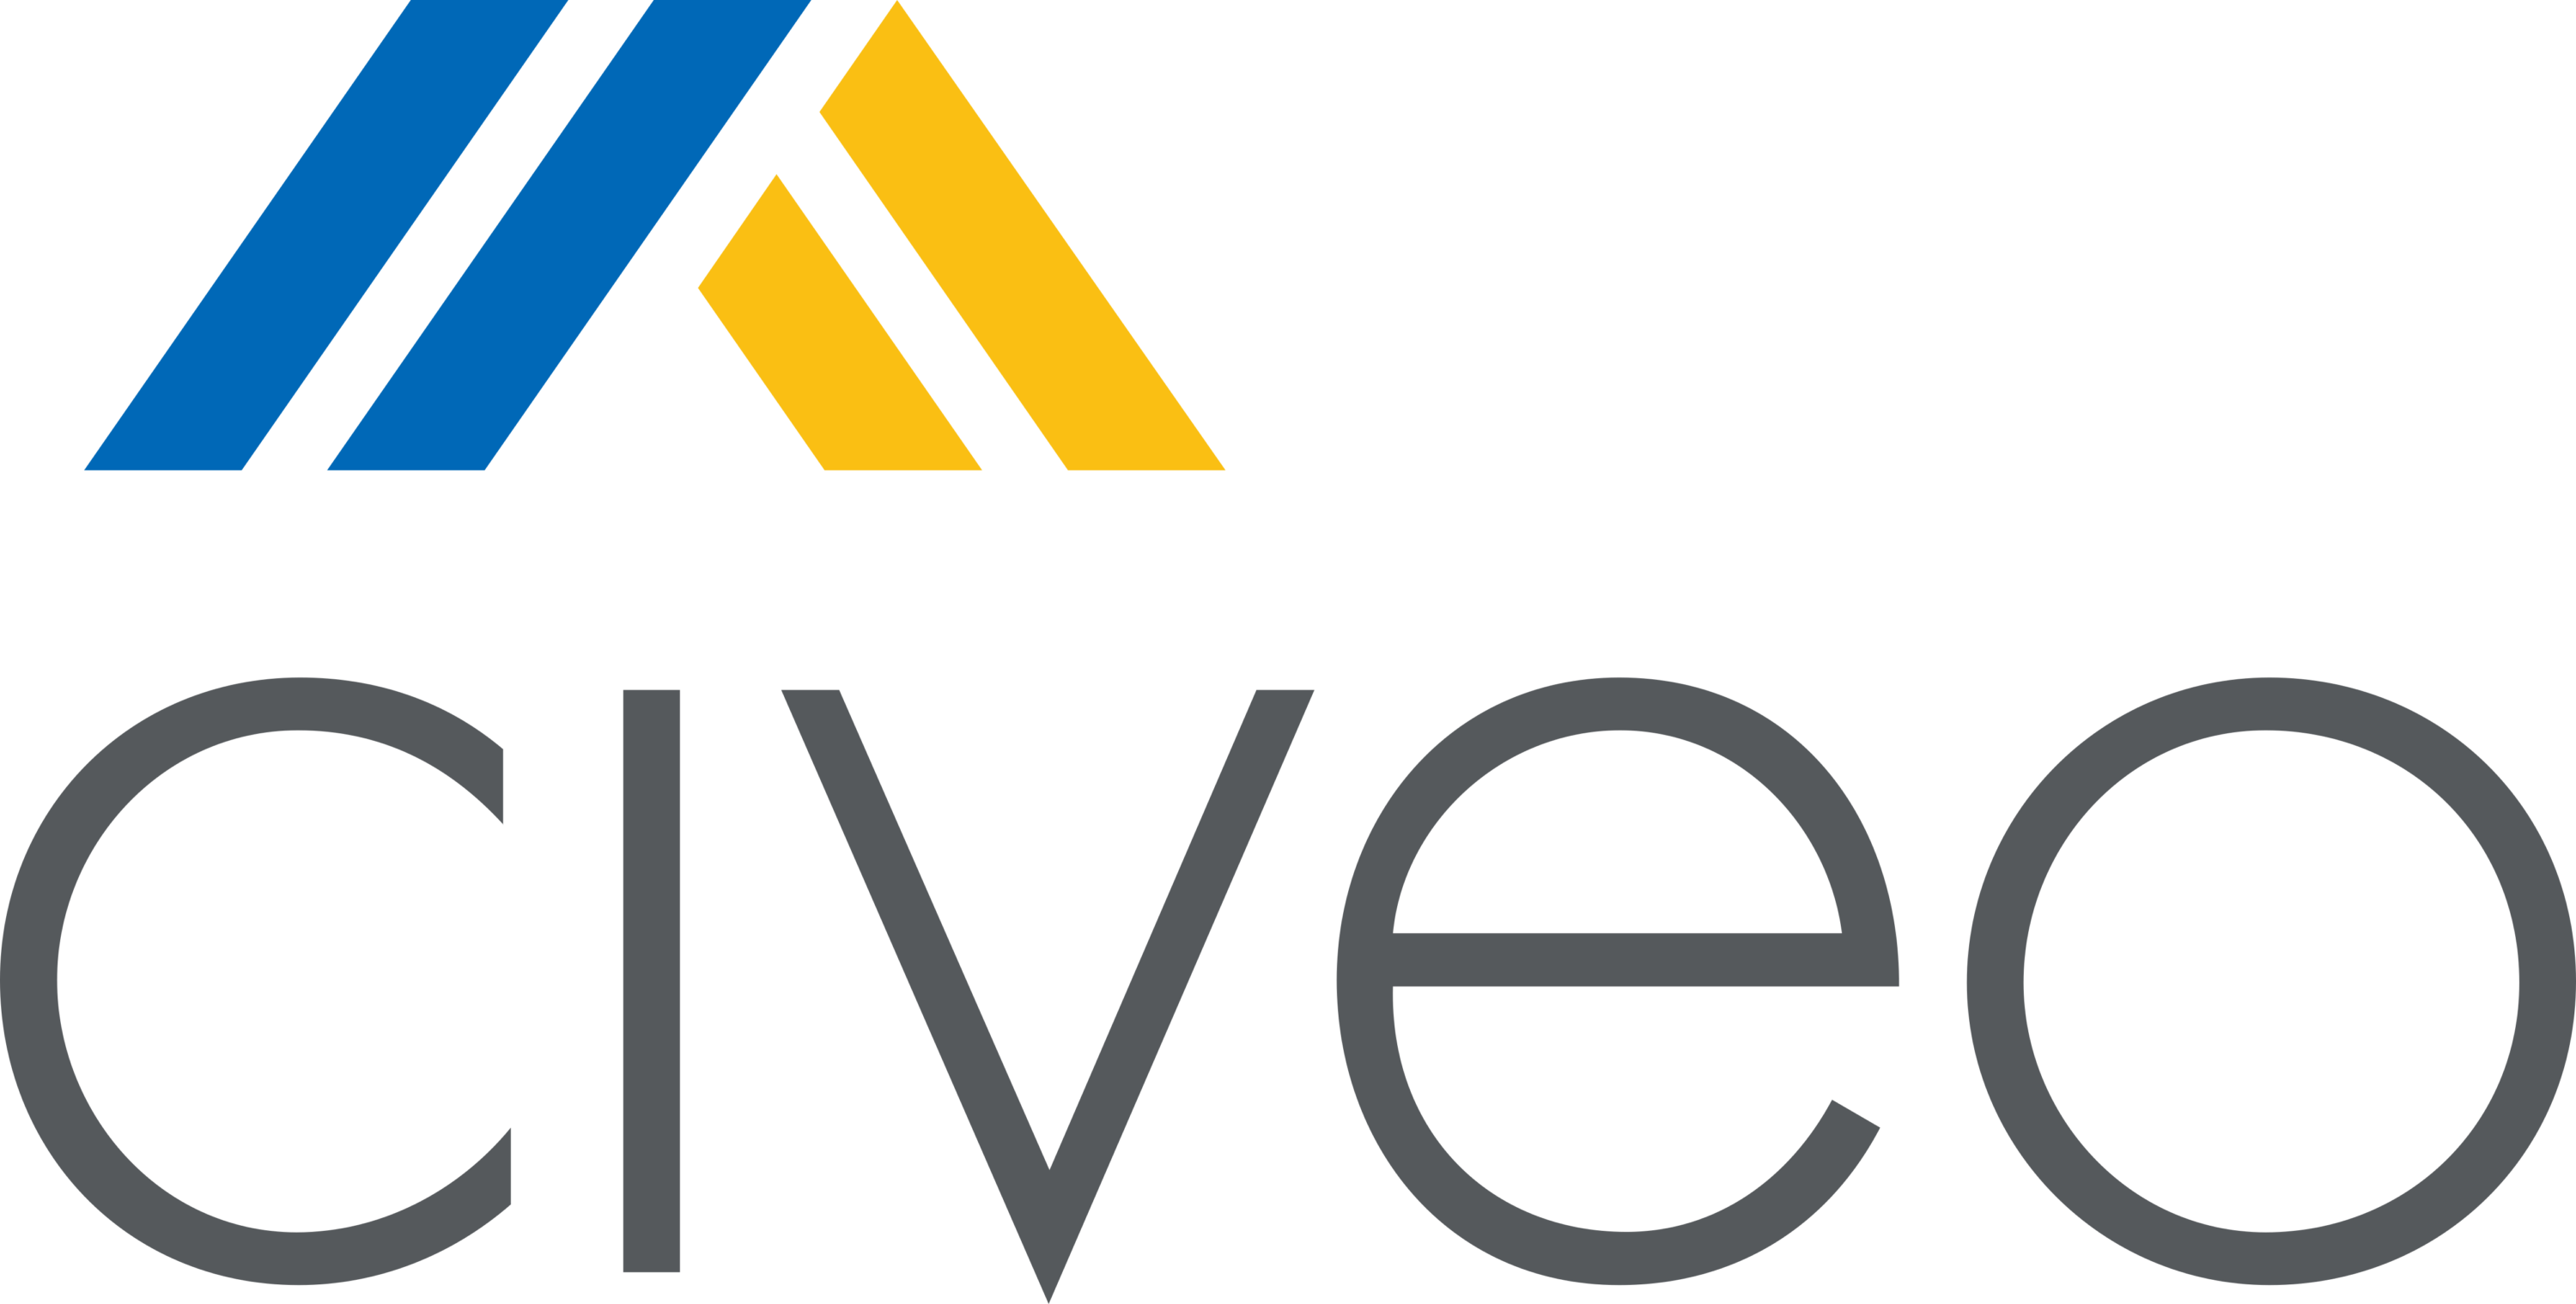 Civeo Corporation Logo